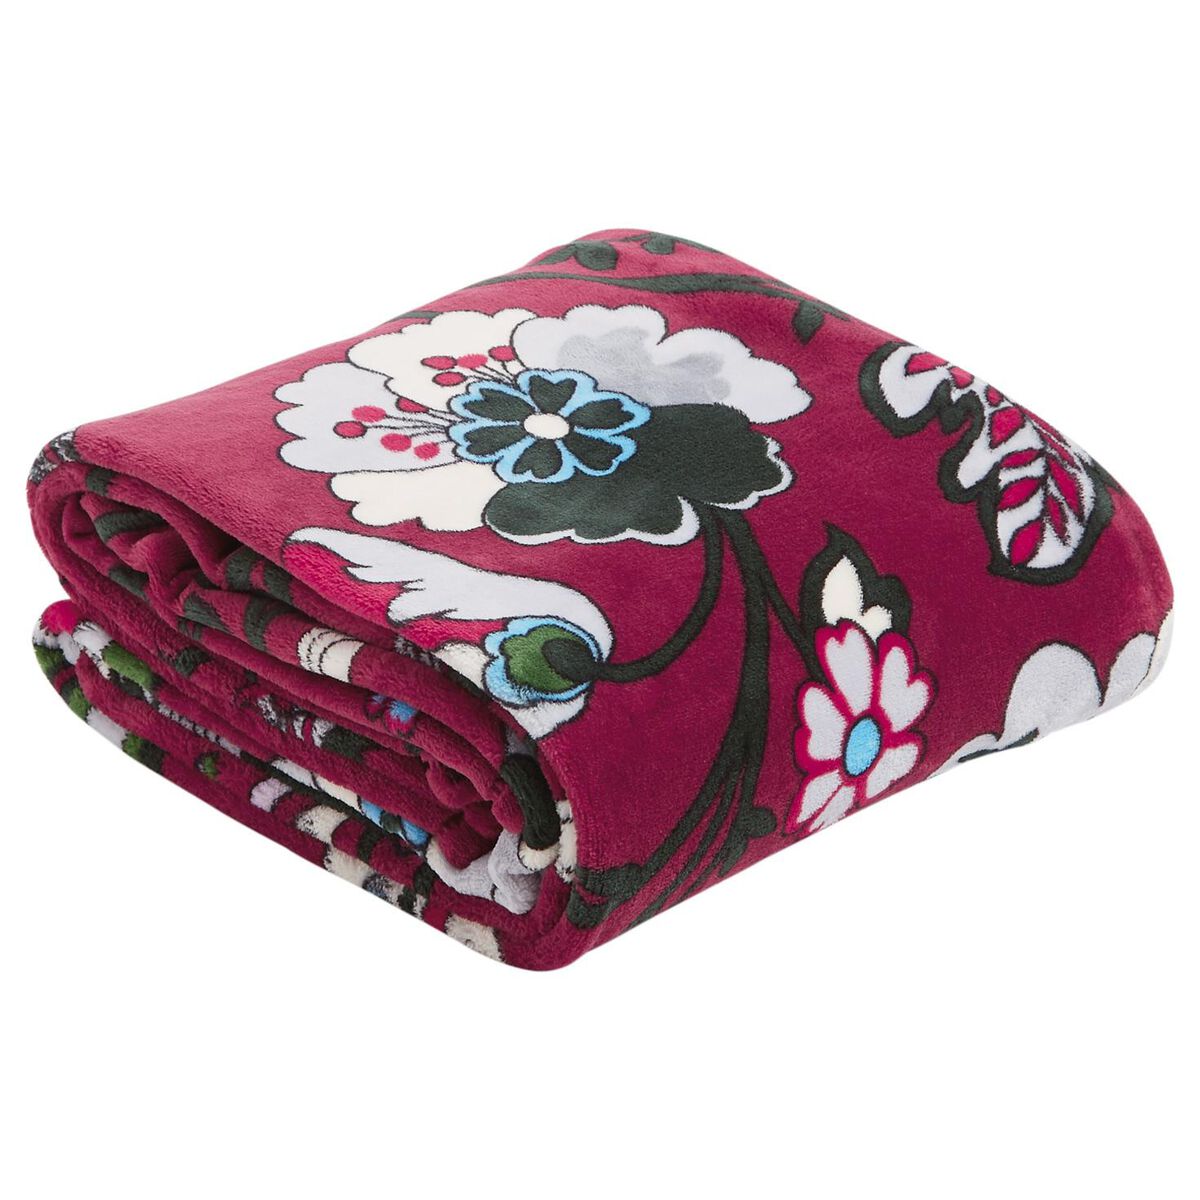 Vera Bradley Throw Blanket in Bordeaux Blooms - Pillows & Blankets ...